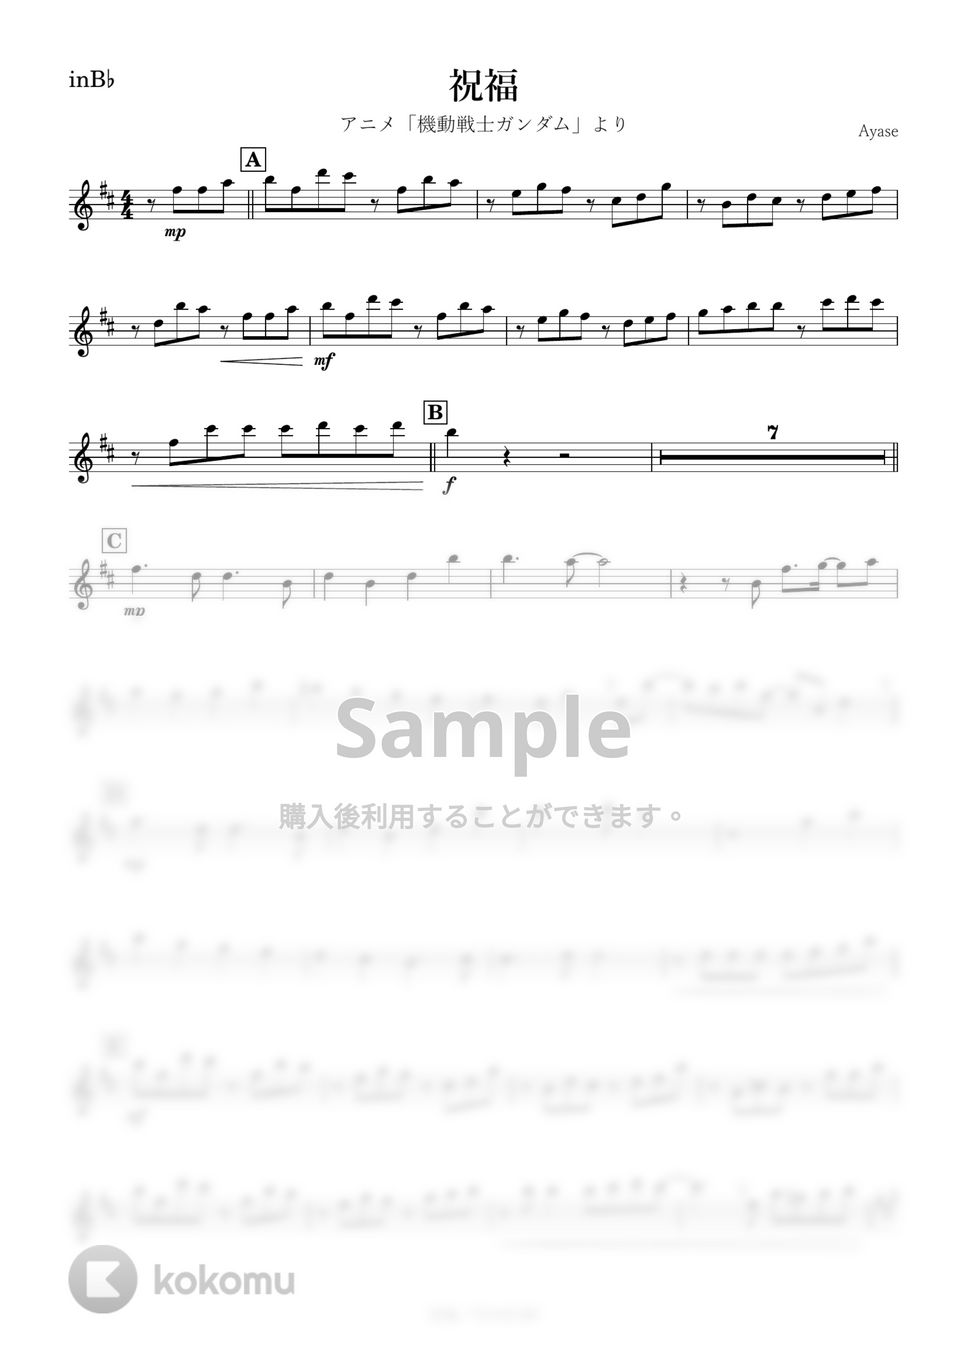 YOASOBI - 祝福 (B♭) by kanamusic